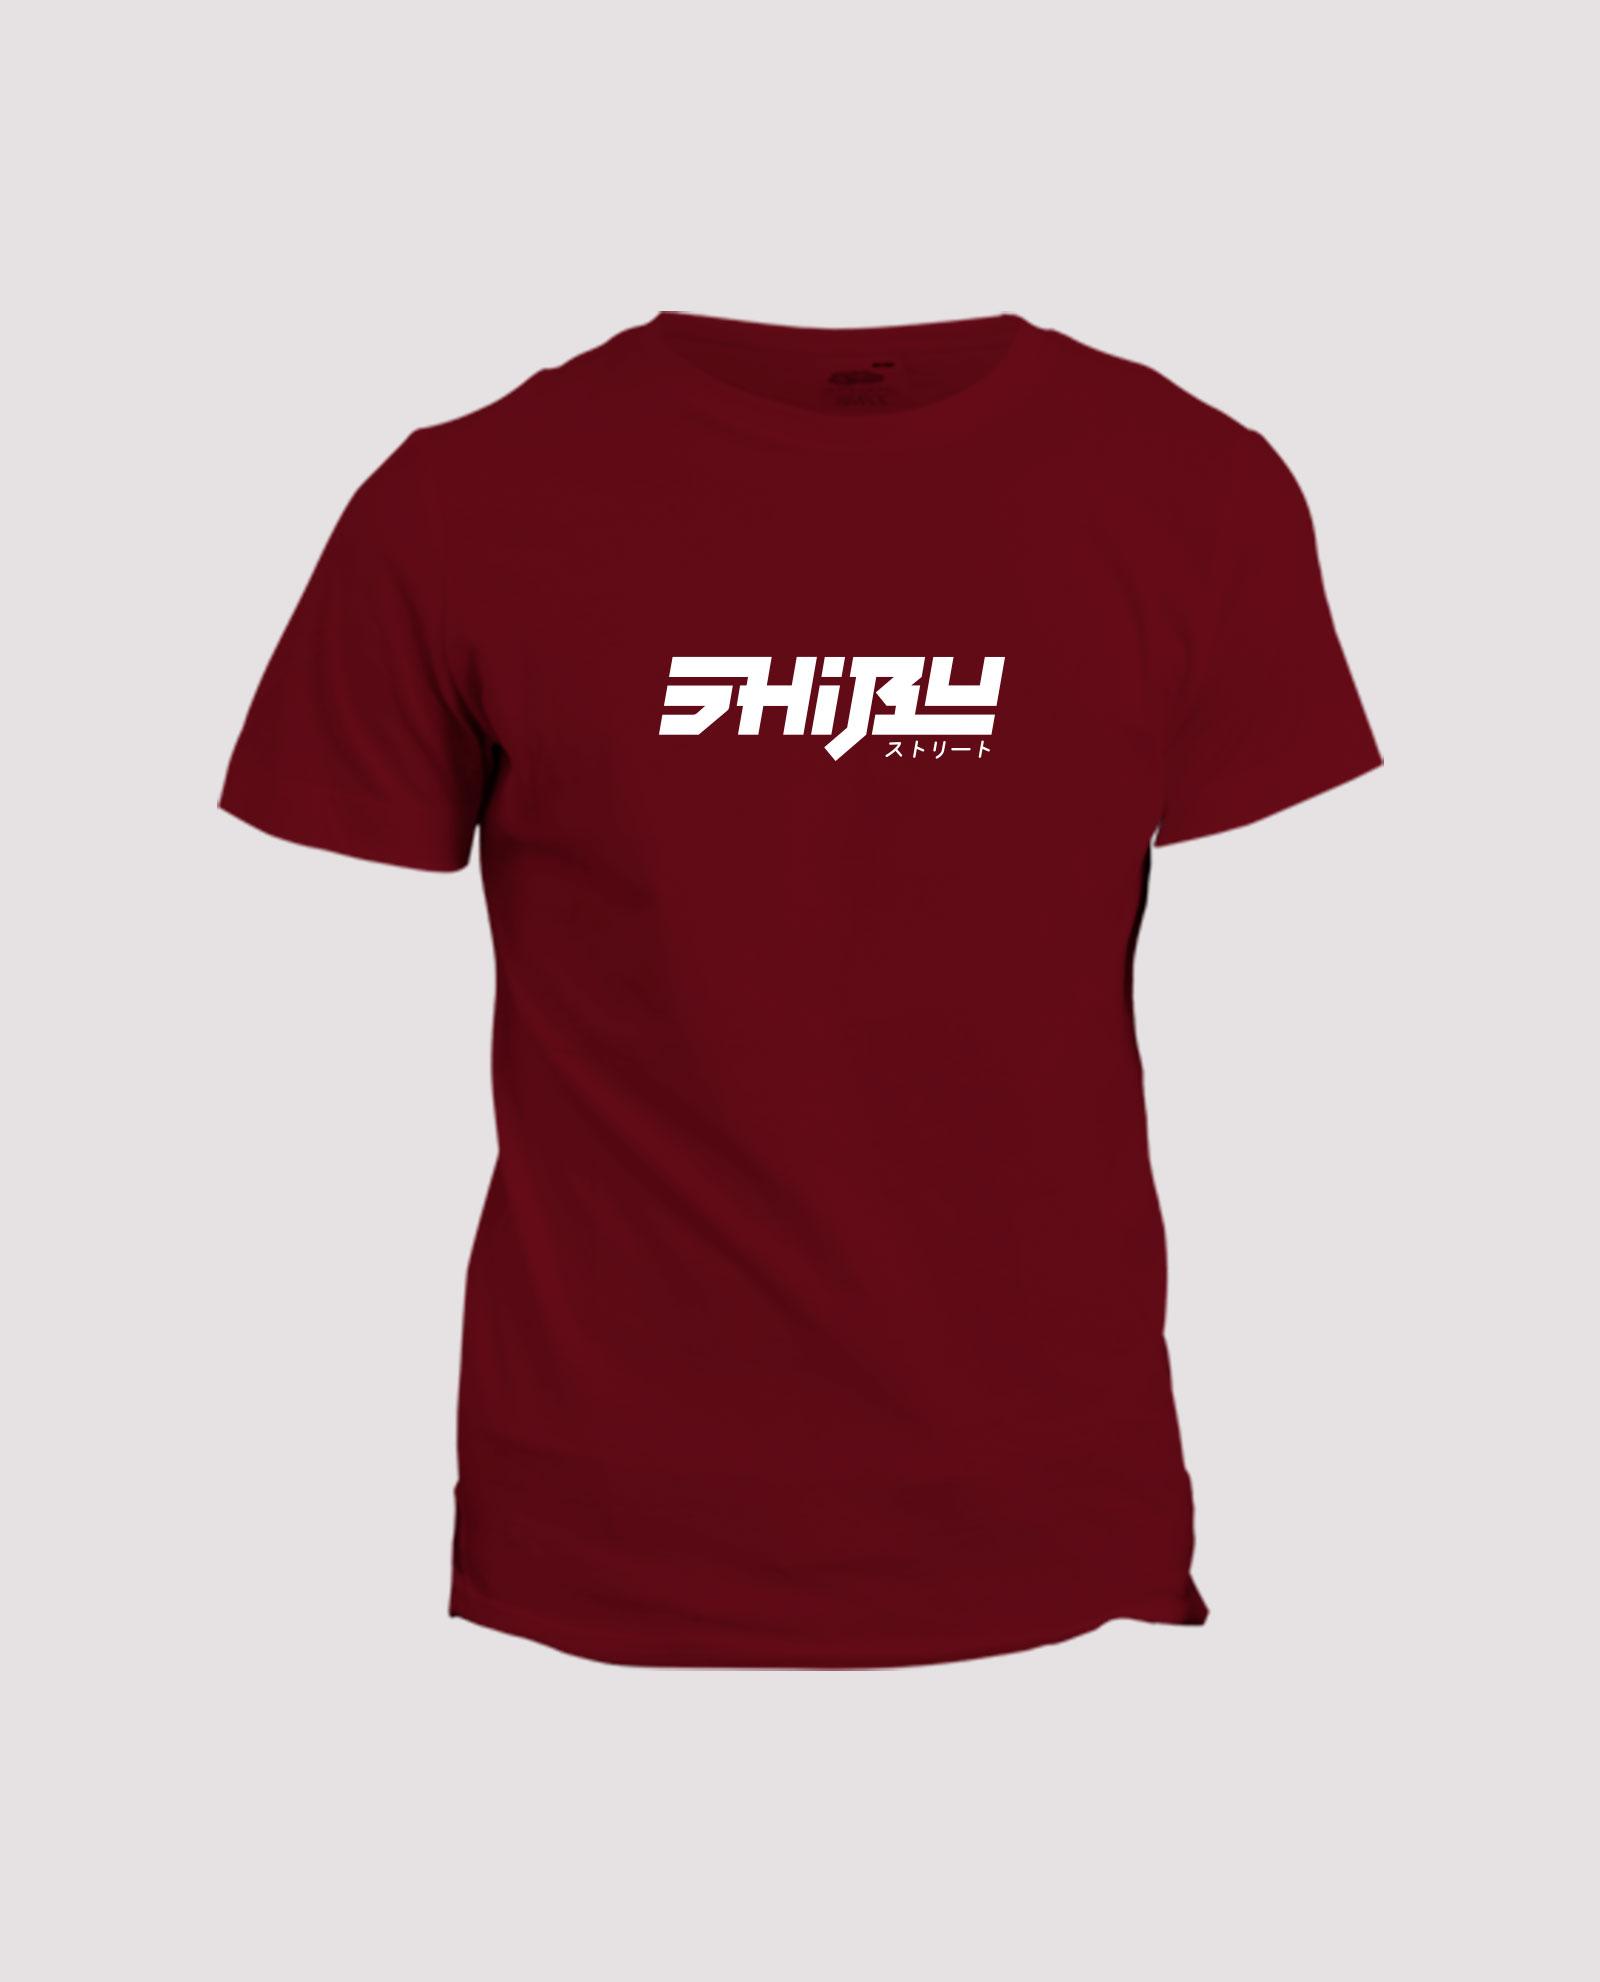 T-shirt Shibu – Sportwear – MMA – Mansour Barnaoui